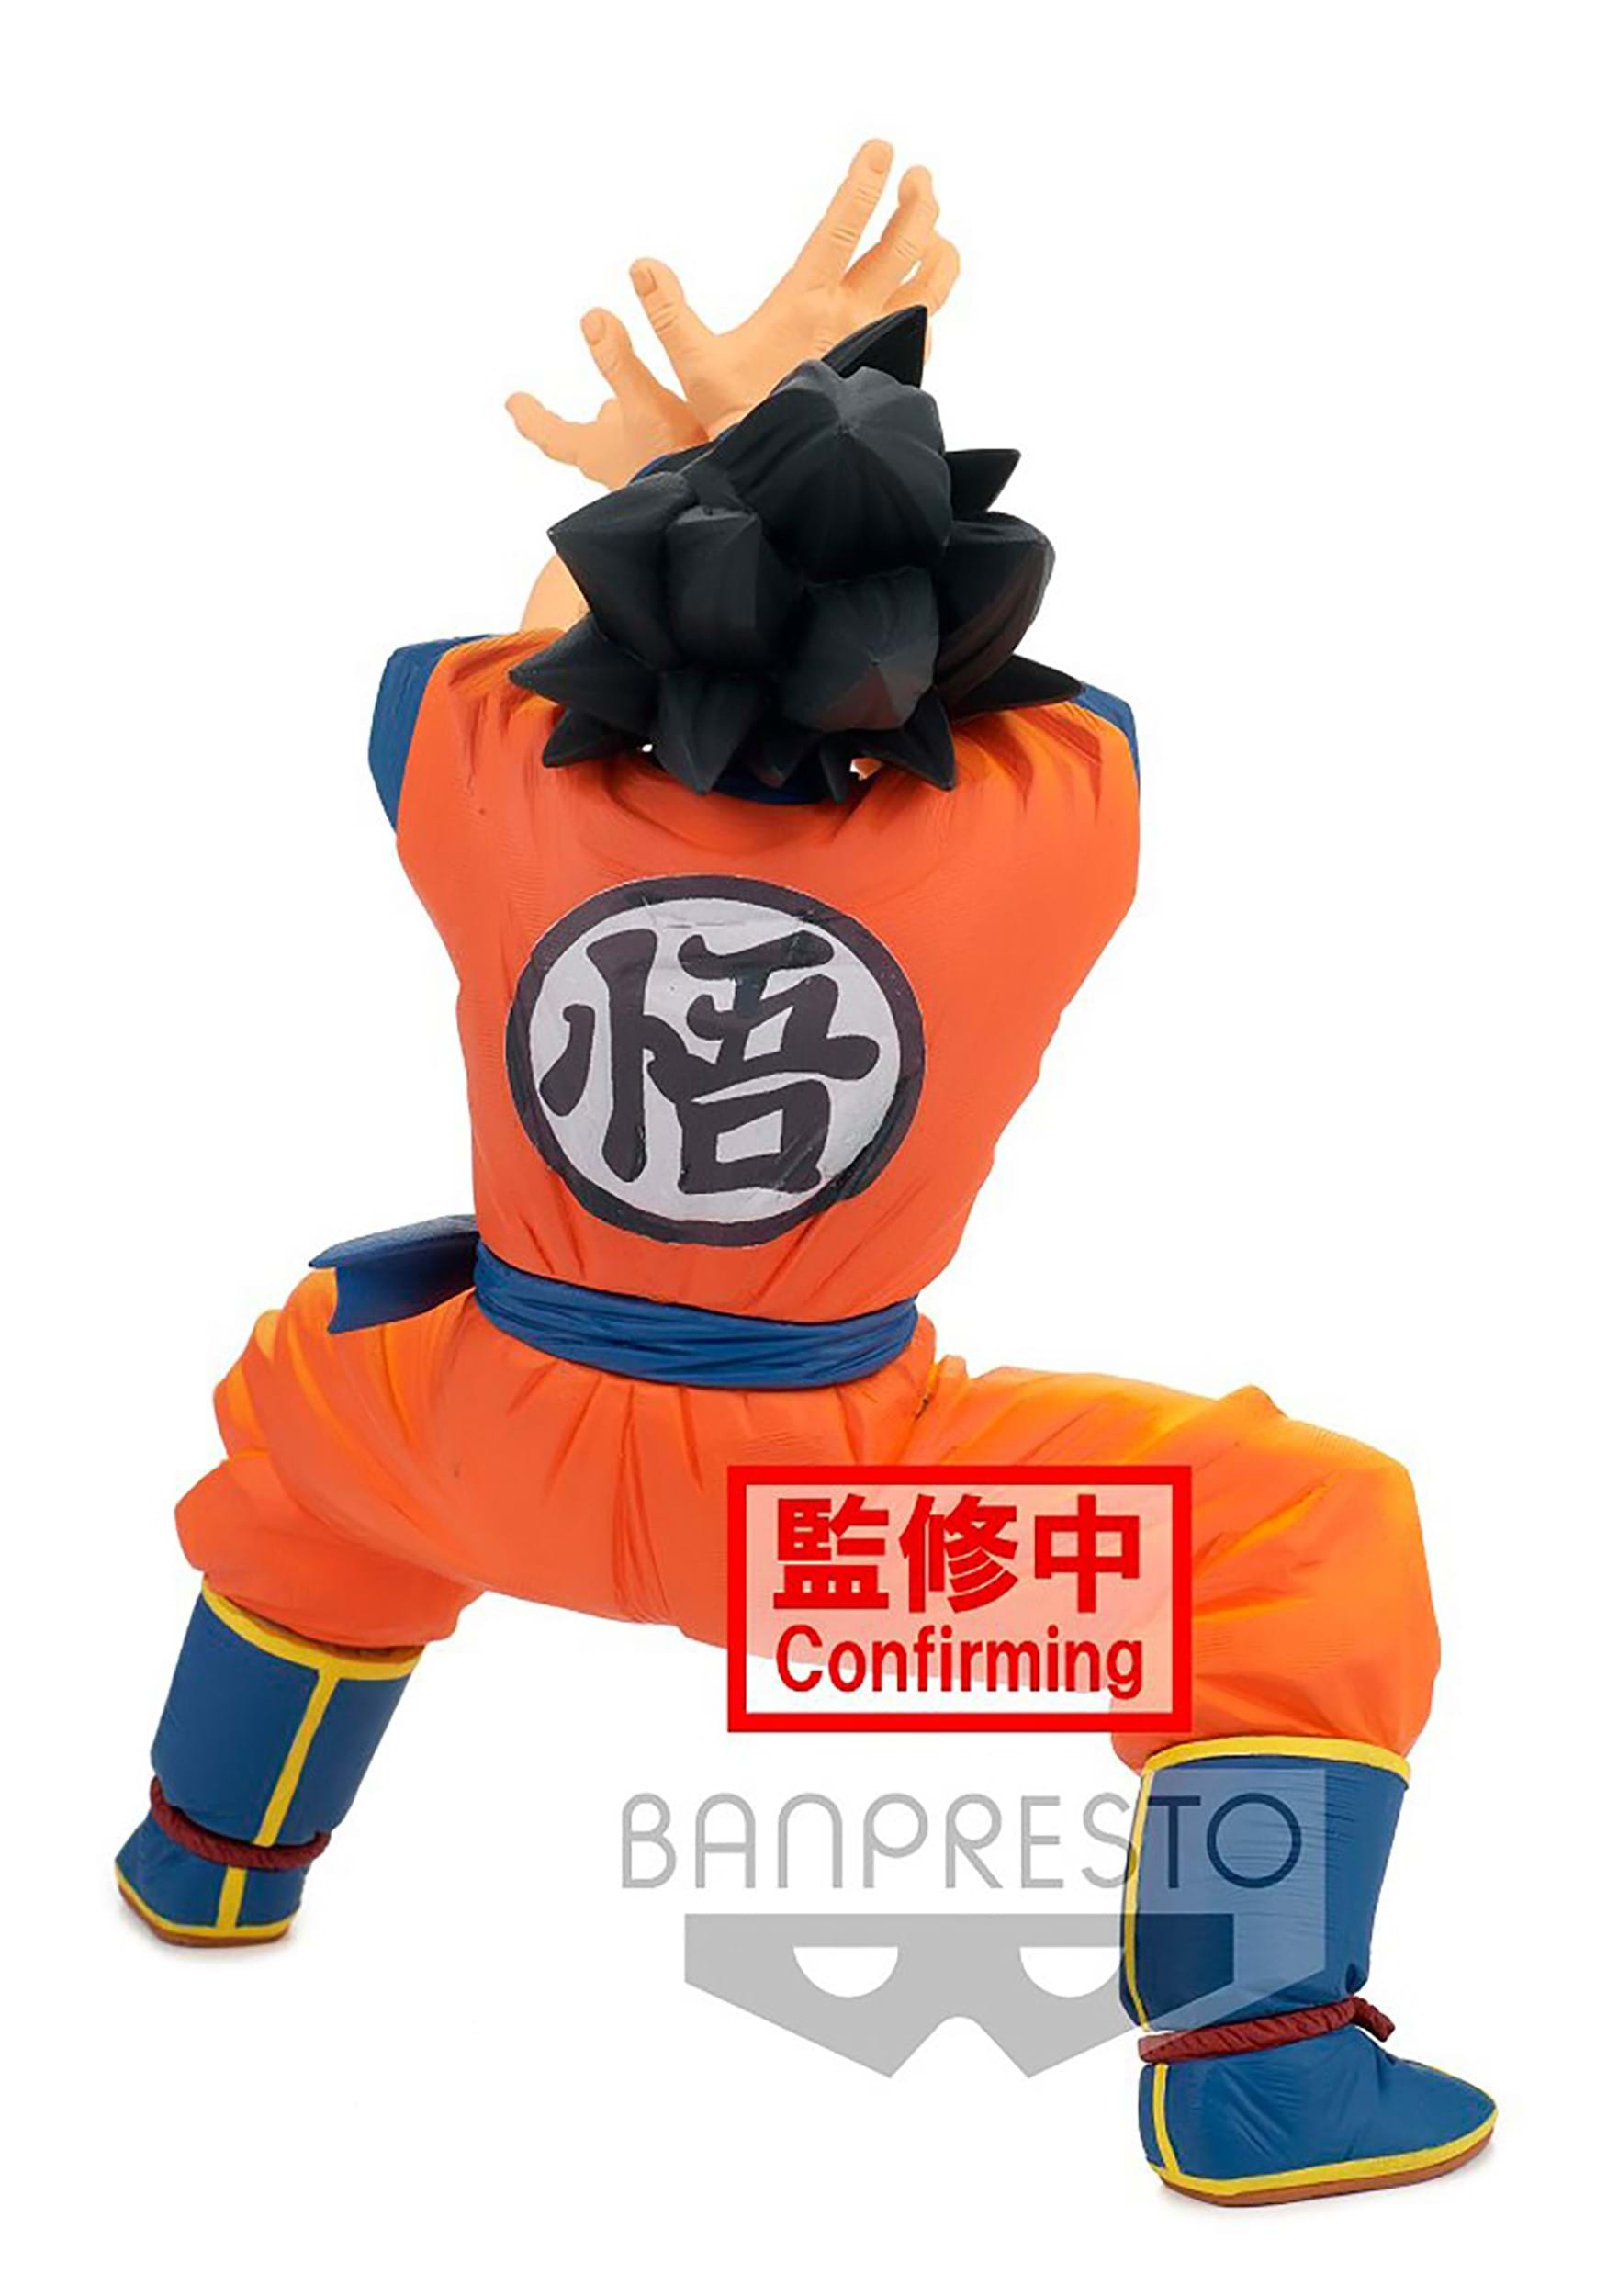 Dragon Ball Super Goku Super Zenkai Solid Vol. 2 Figure